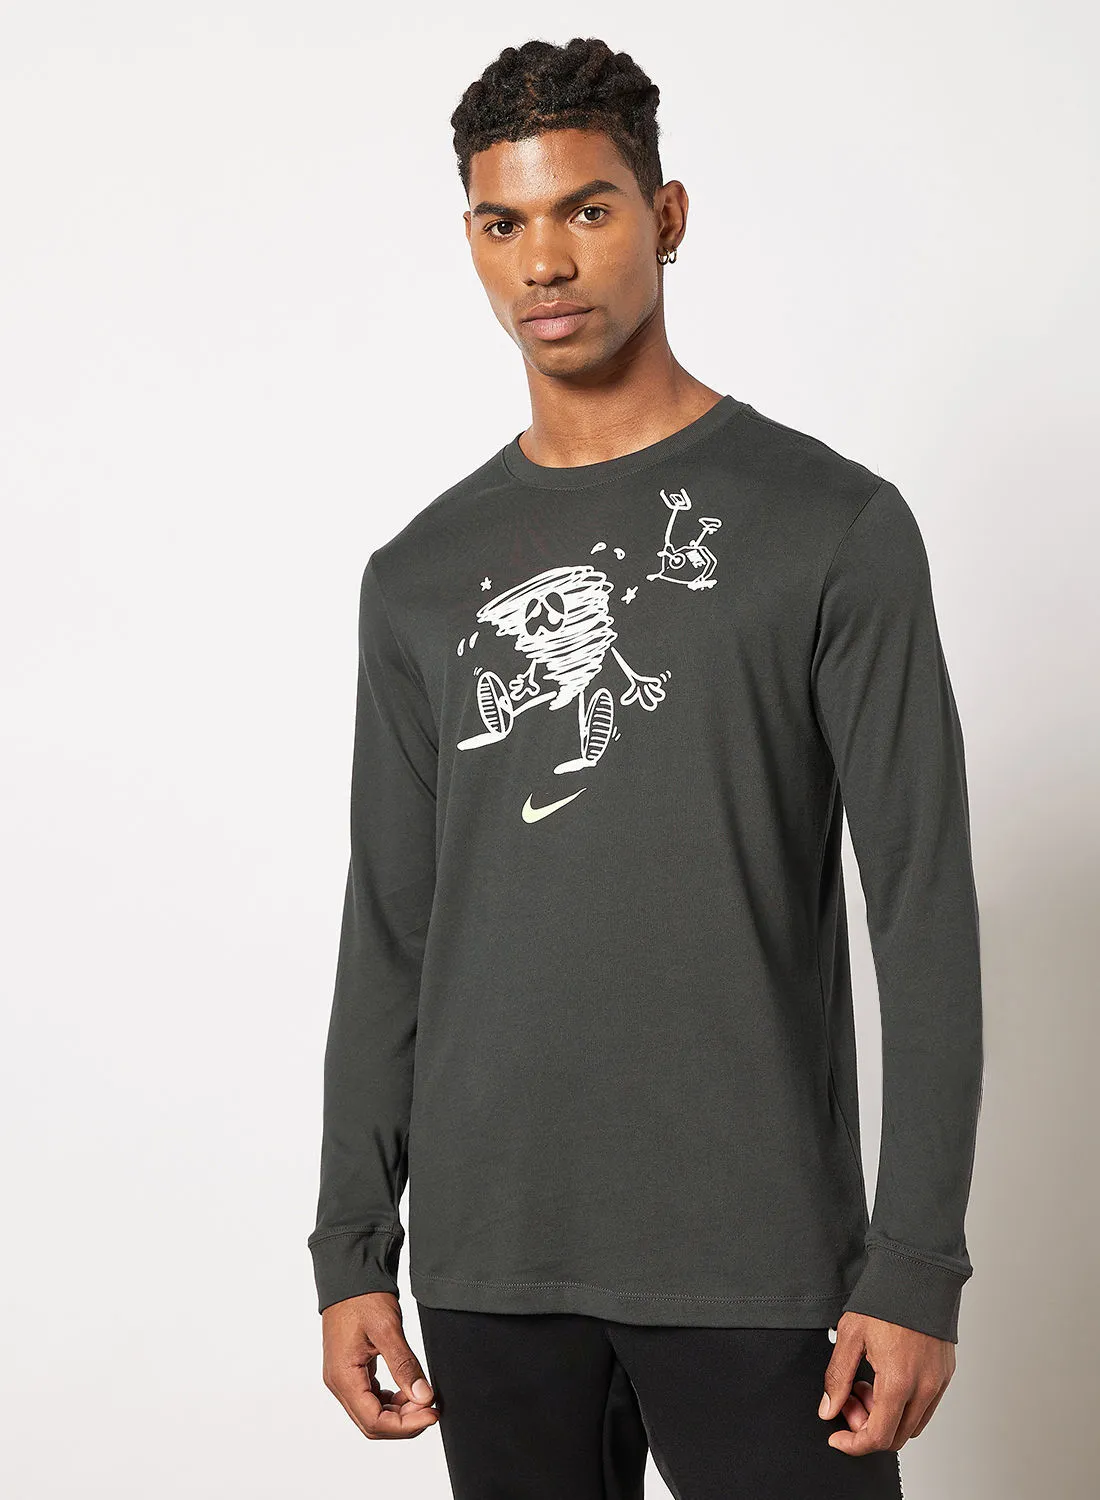 Nike Dri-FIT Long-Sleeve T-Shirt